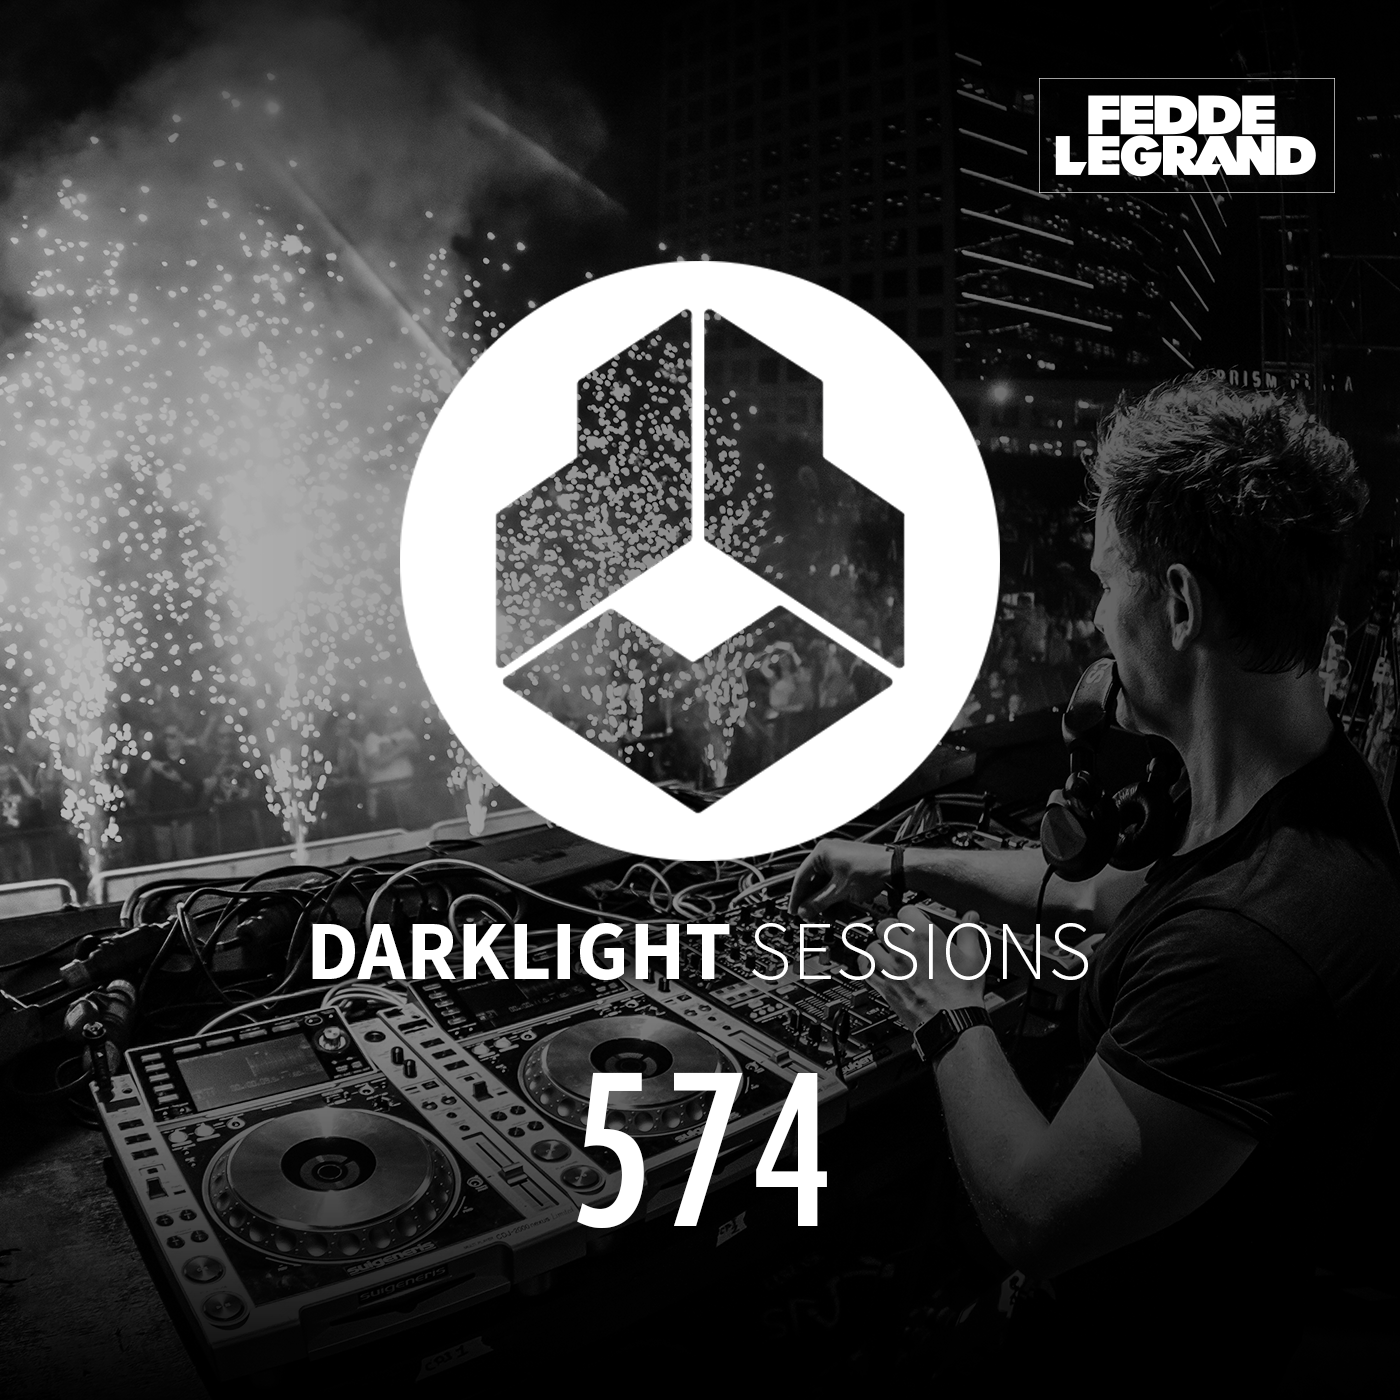 Darklight Sessions 574